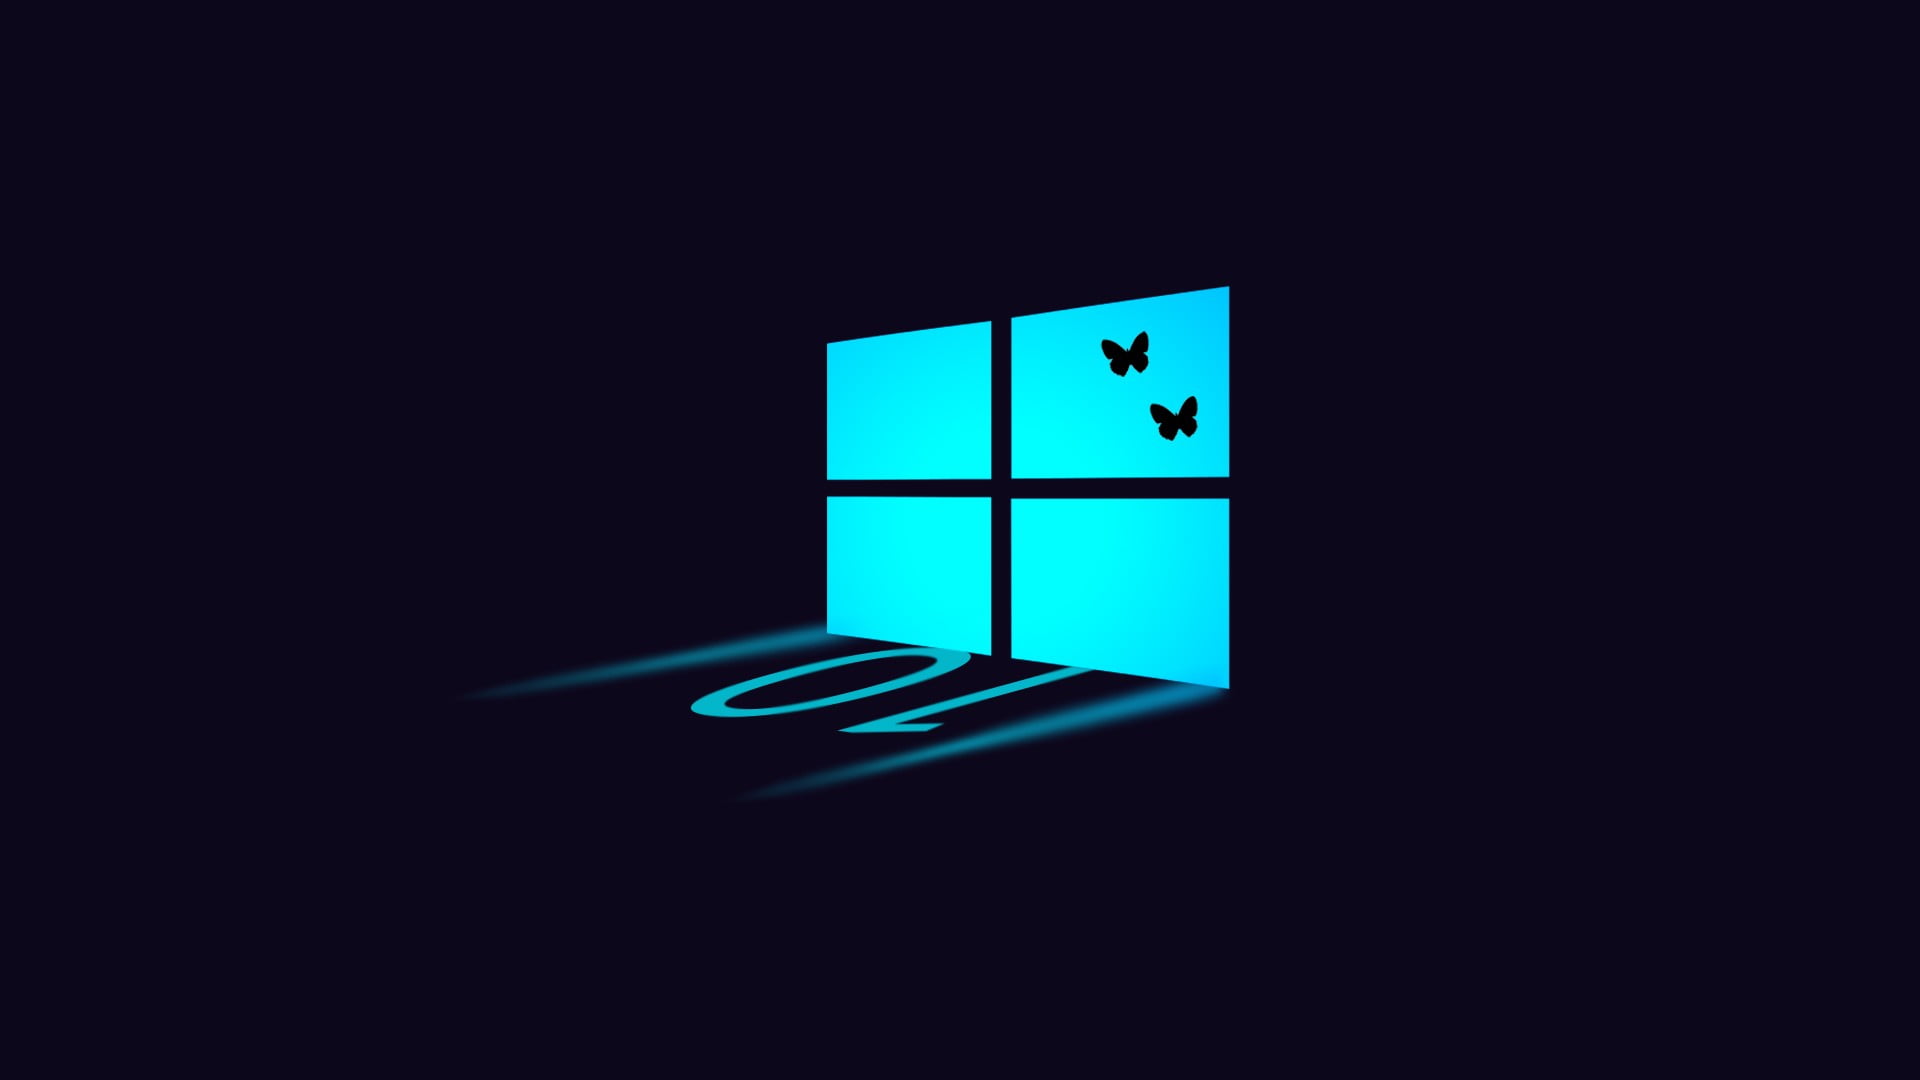 Windows 10 wallpaper, Microsoft, Microsoft Windows, experiments